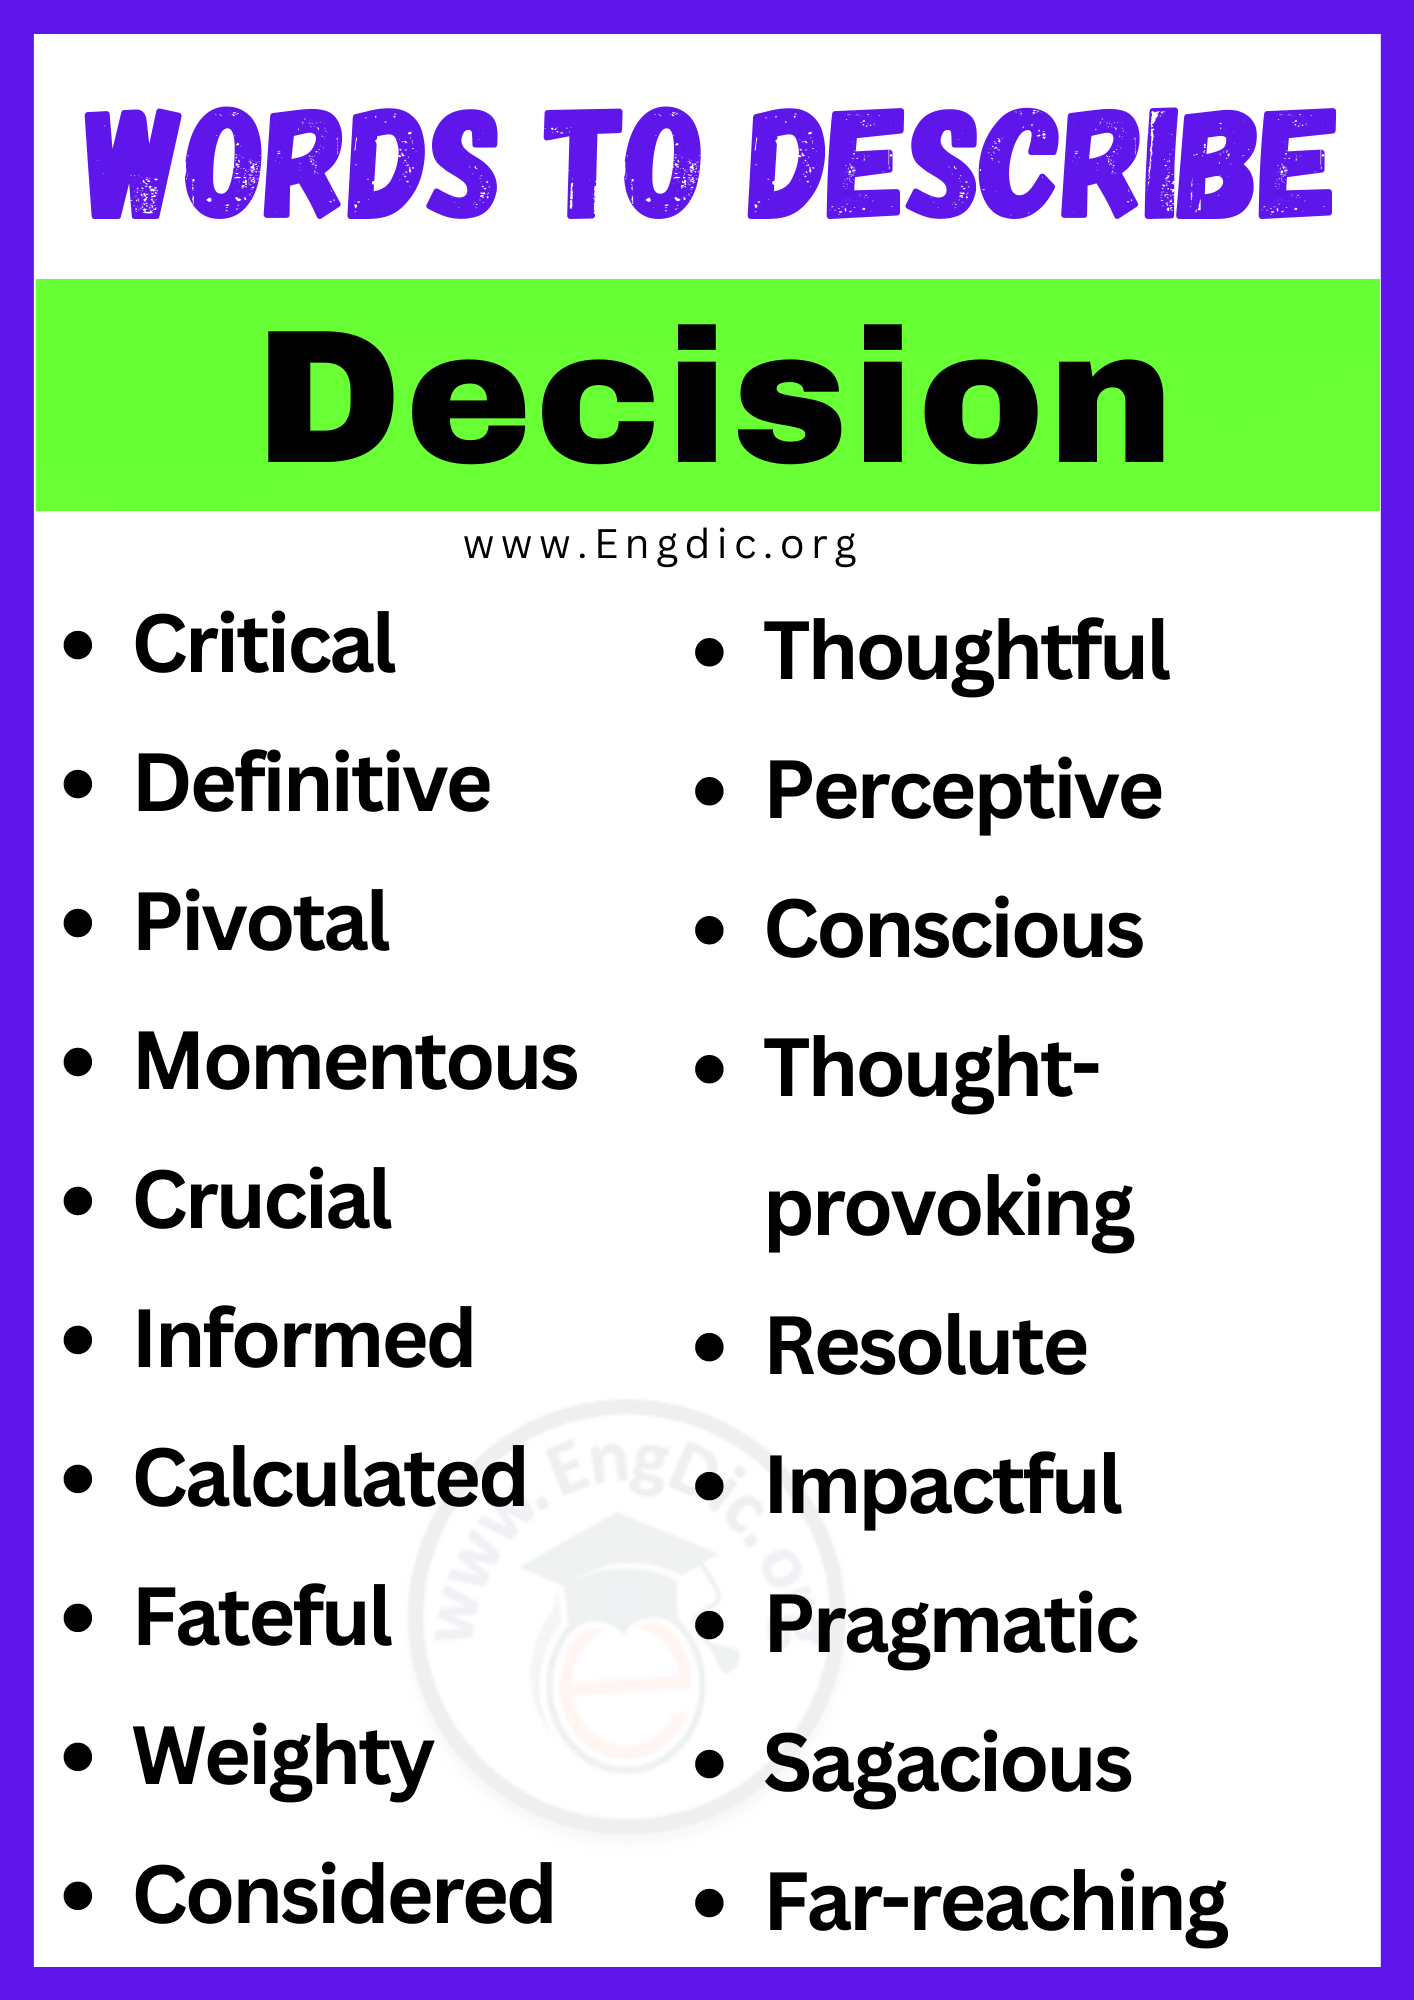 Words to Describe Decision